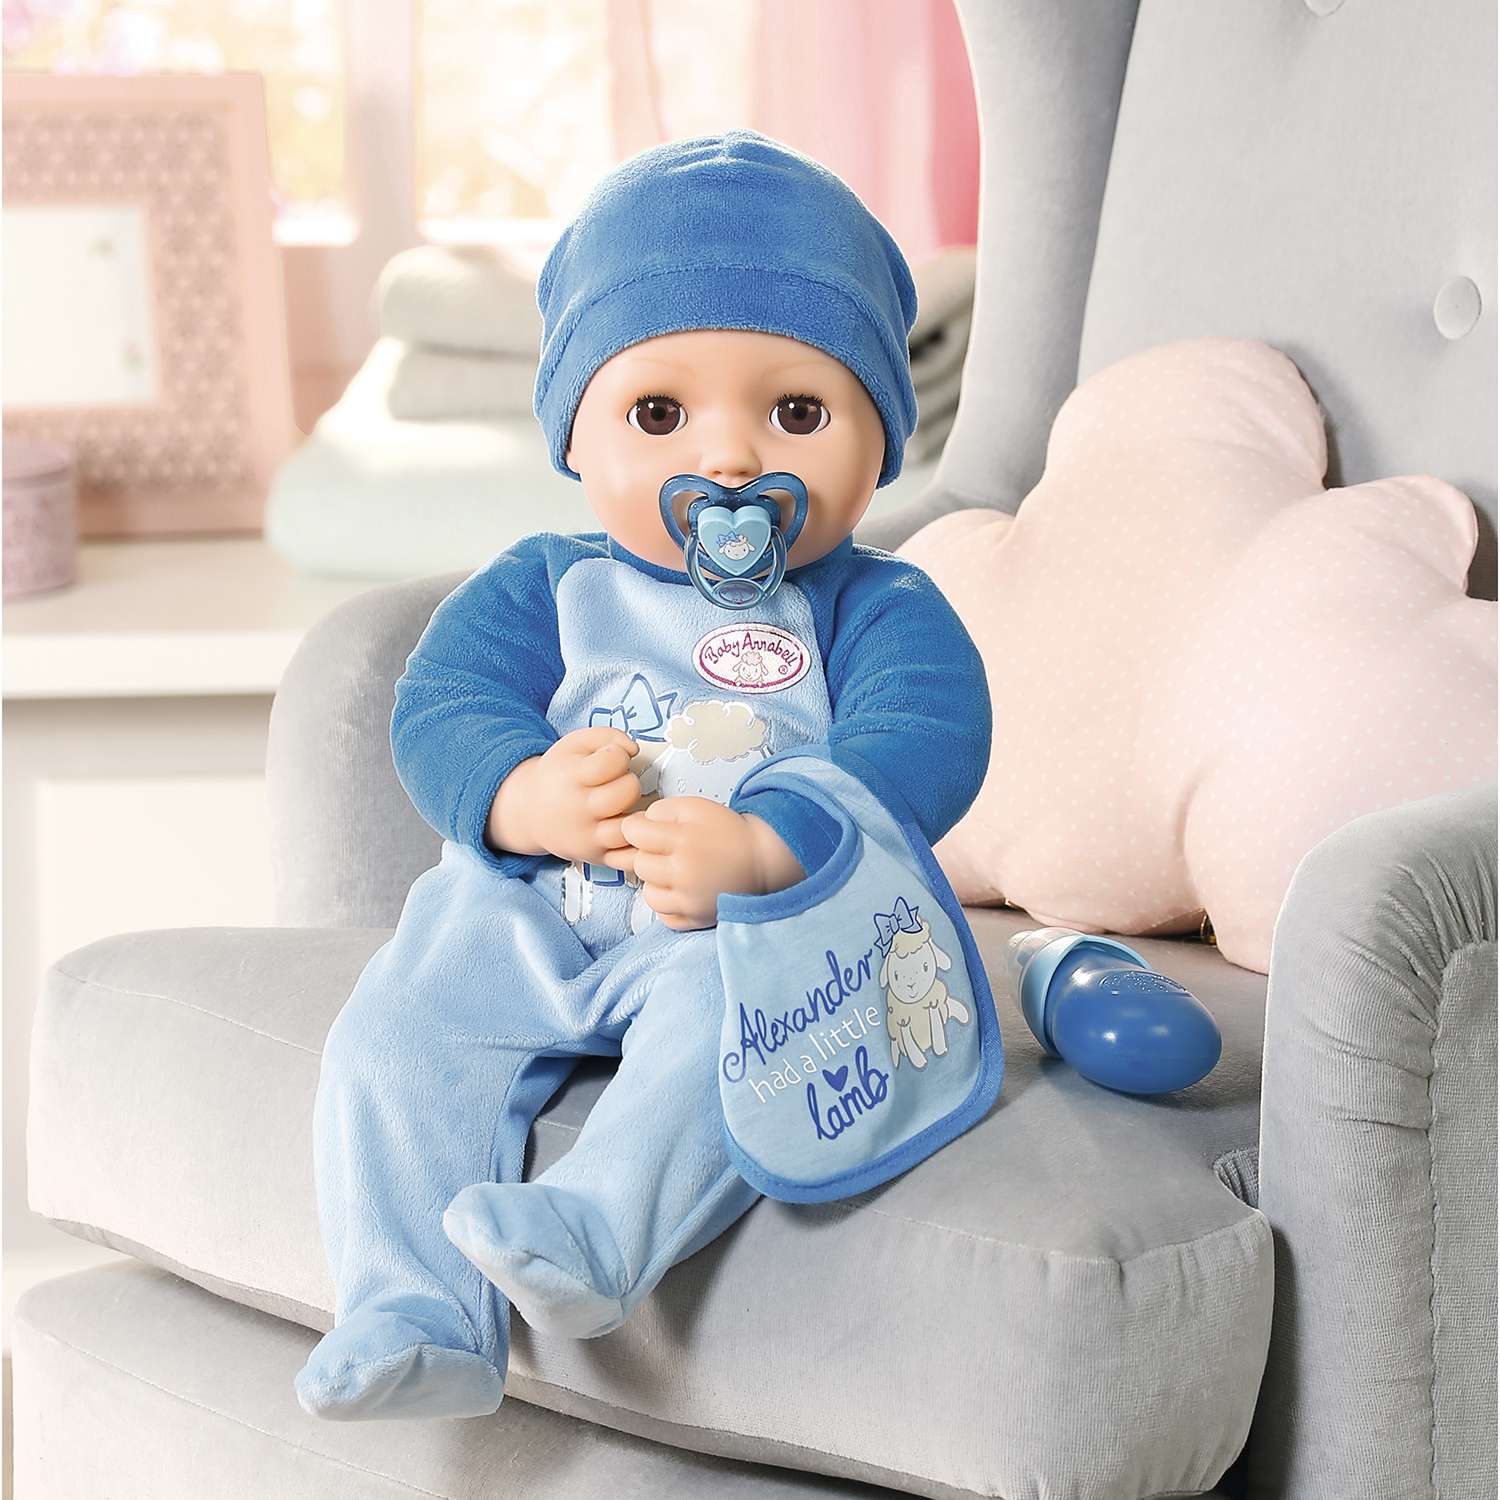 Кукла Baby Zapf Creation Annabell мальчик многофункциональная 701-898 701-898 - фото 2